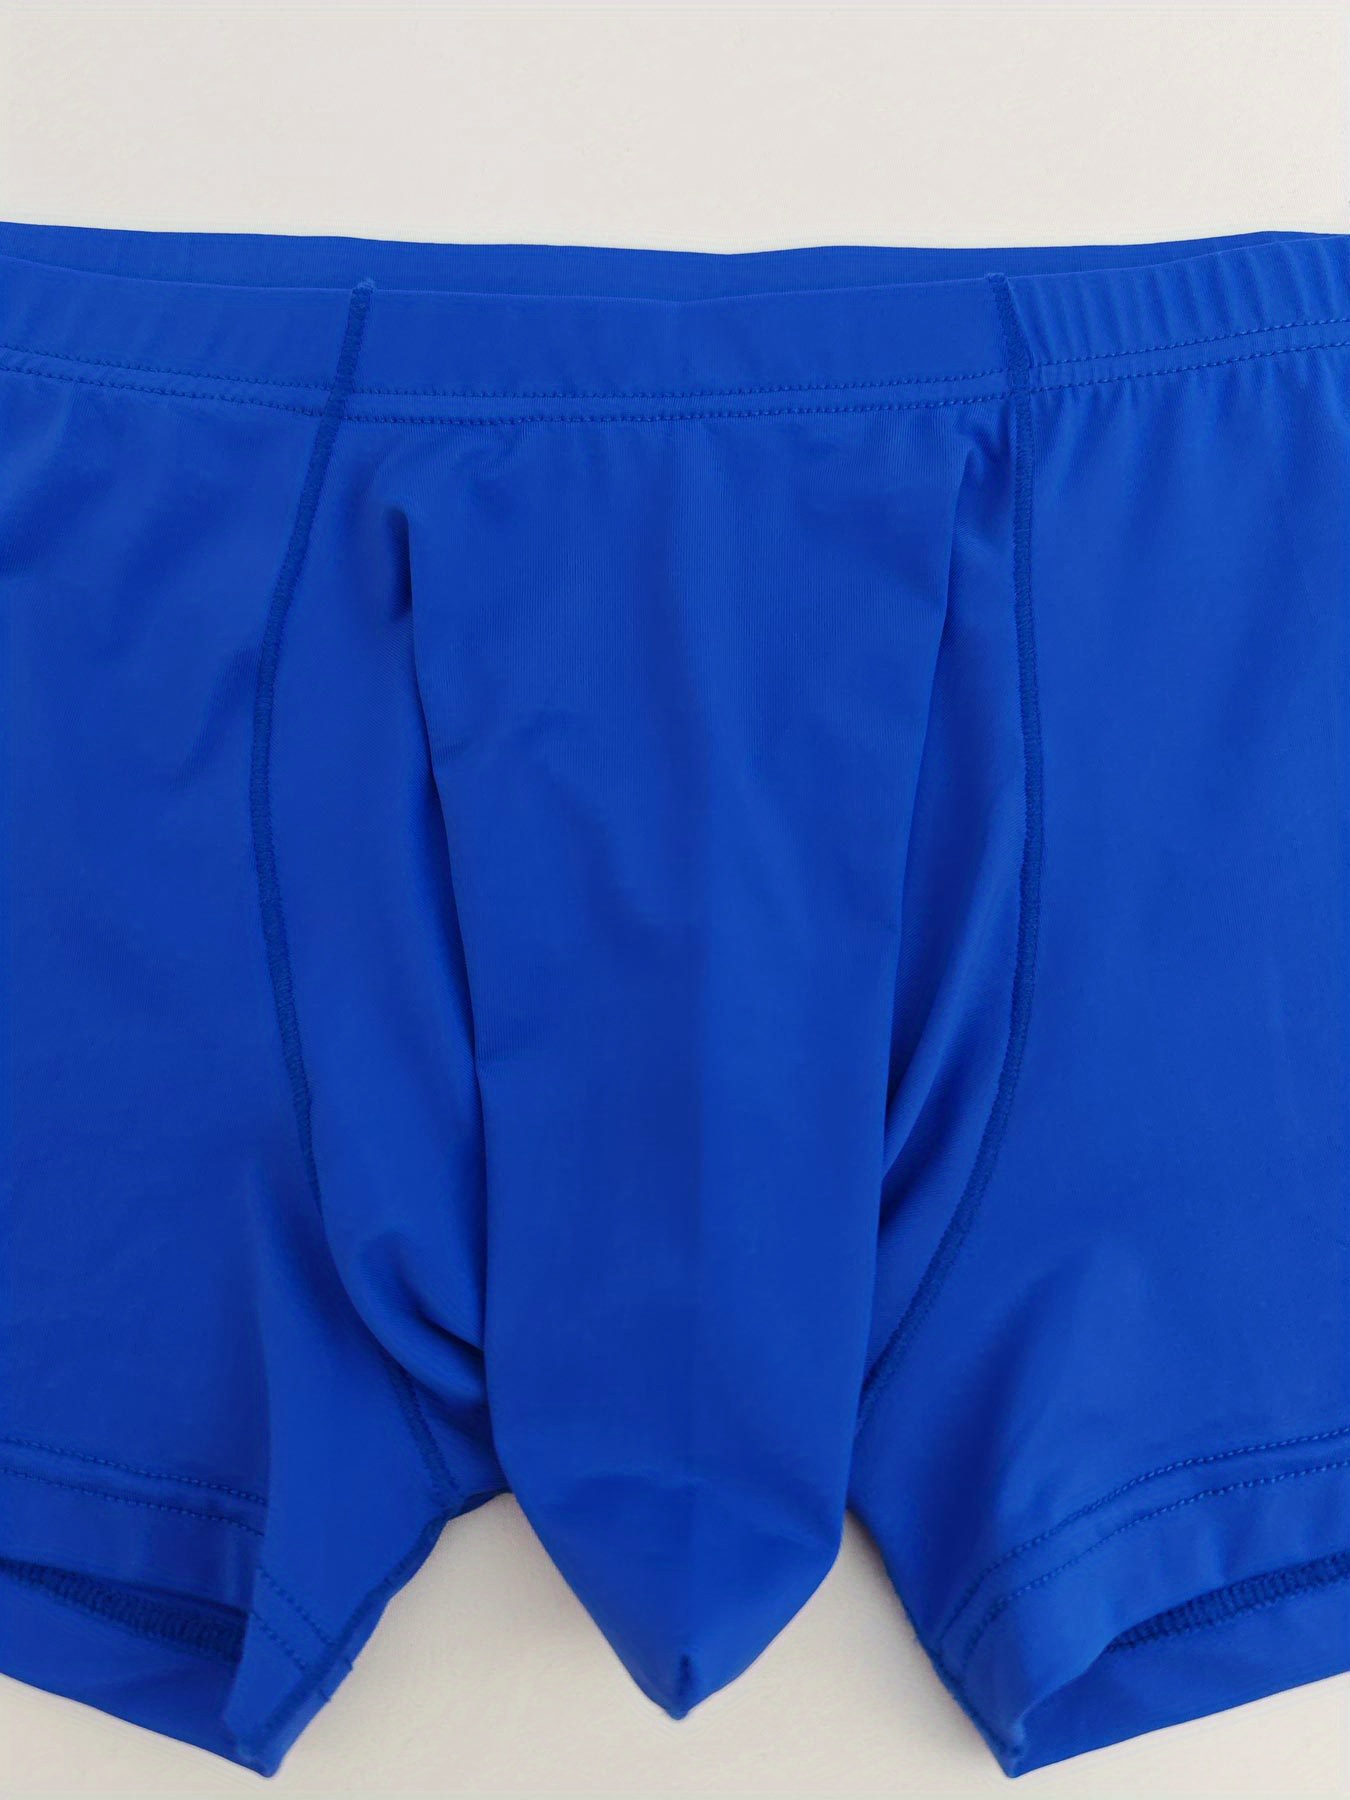 CHICTRY Men's Translucent Drawstring Boxer Briefs Shorts Breathable Mesh  Swim Trunks Underwear